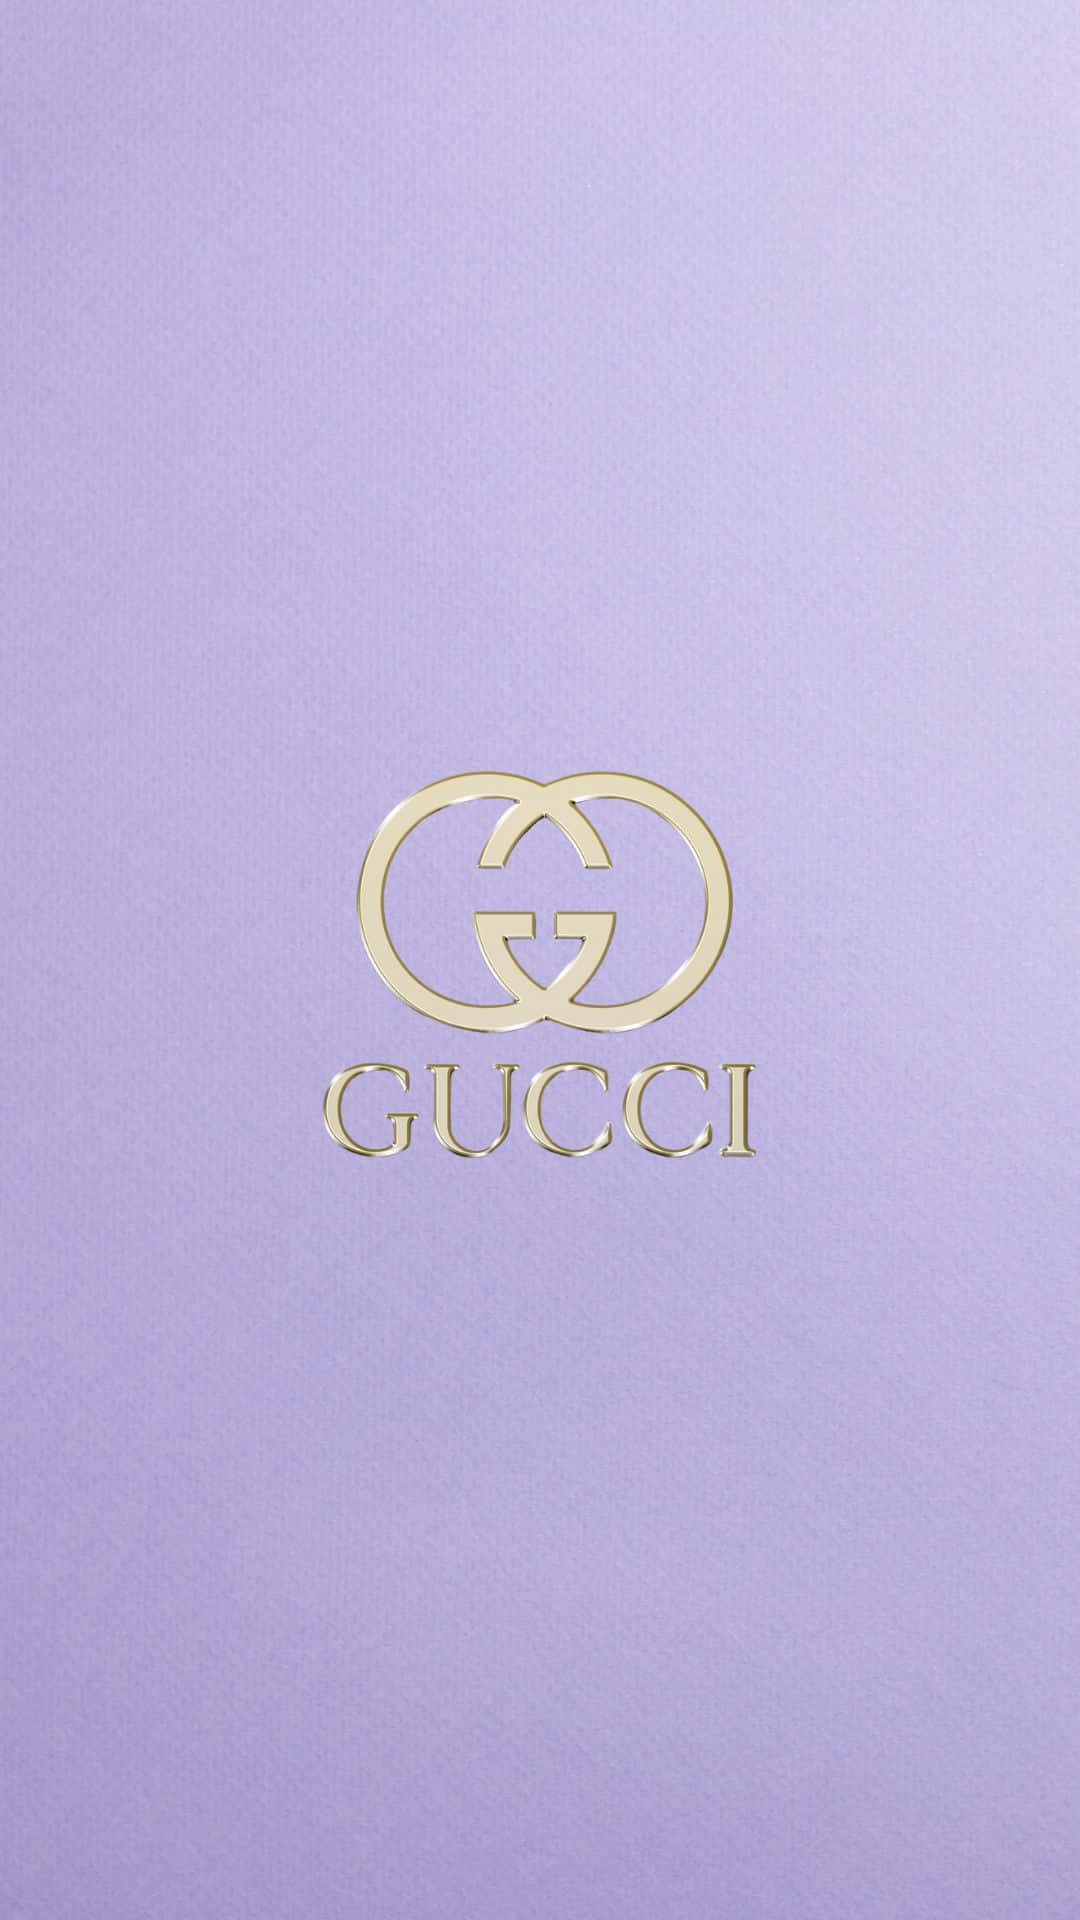 Gucci Logo On A Purple Background Wallpaper